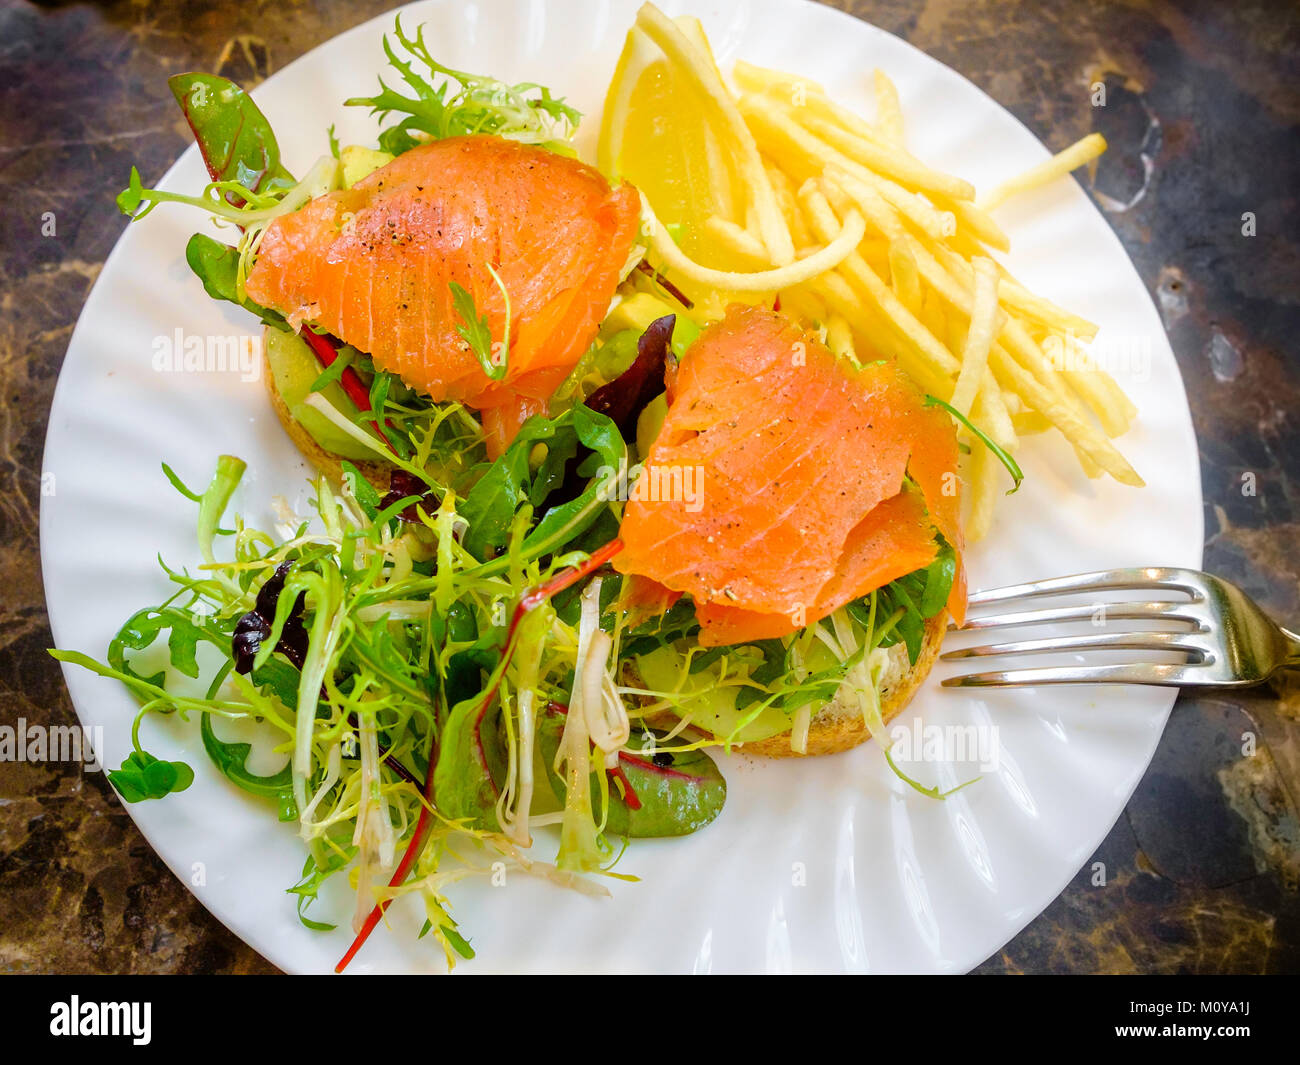 Smoked Salmon and Avocado open sandwich on granary bread with rocket salad garnish and Alumette Potatoes Stock Photo